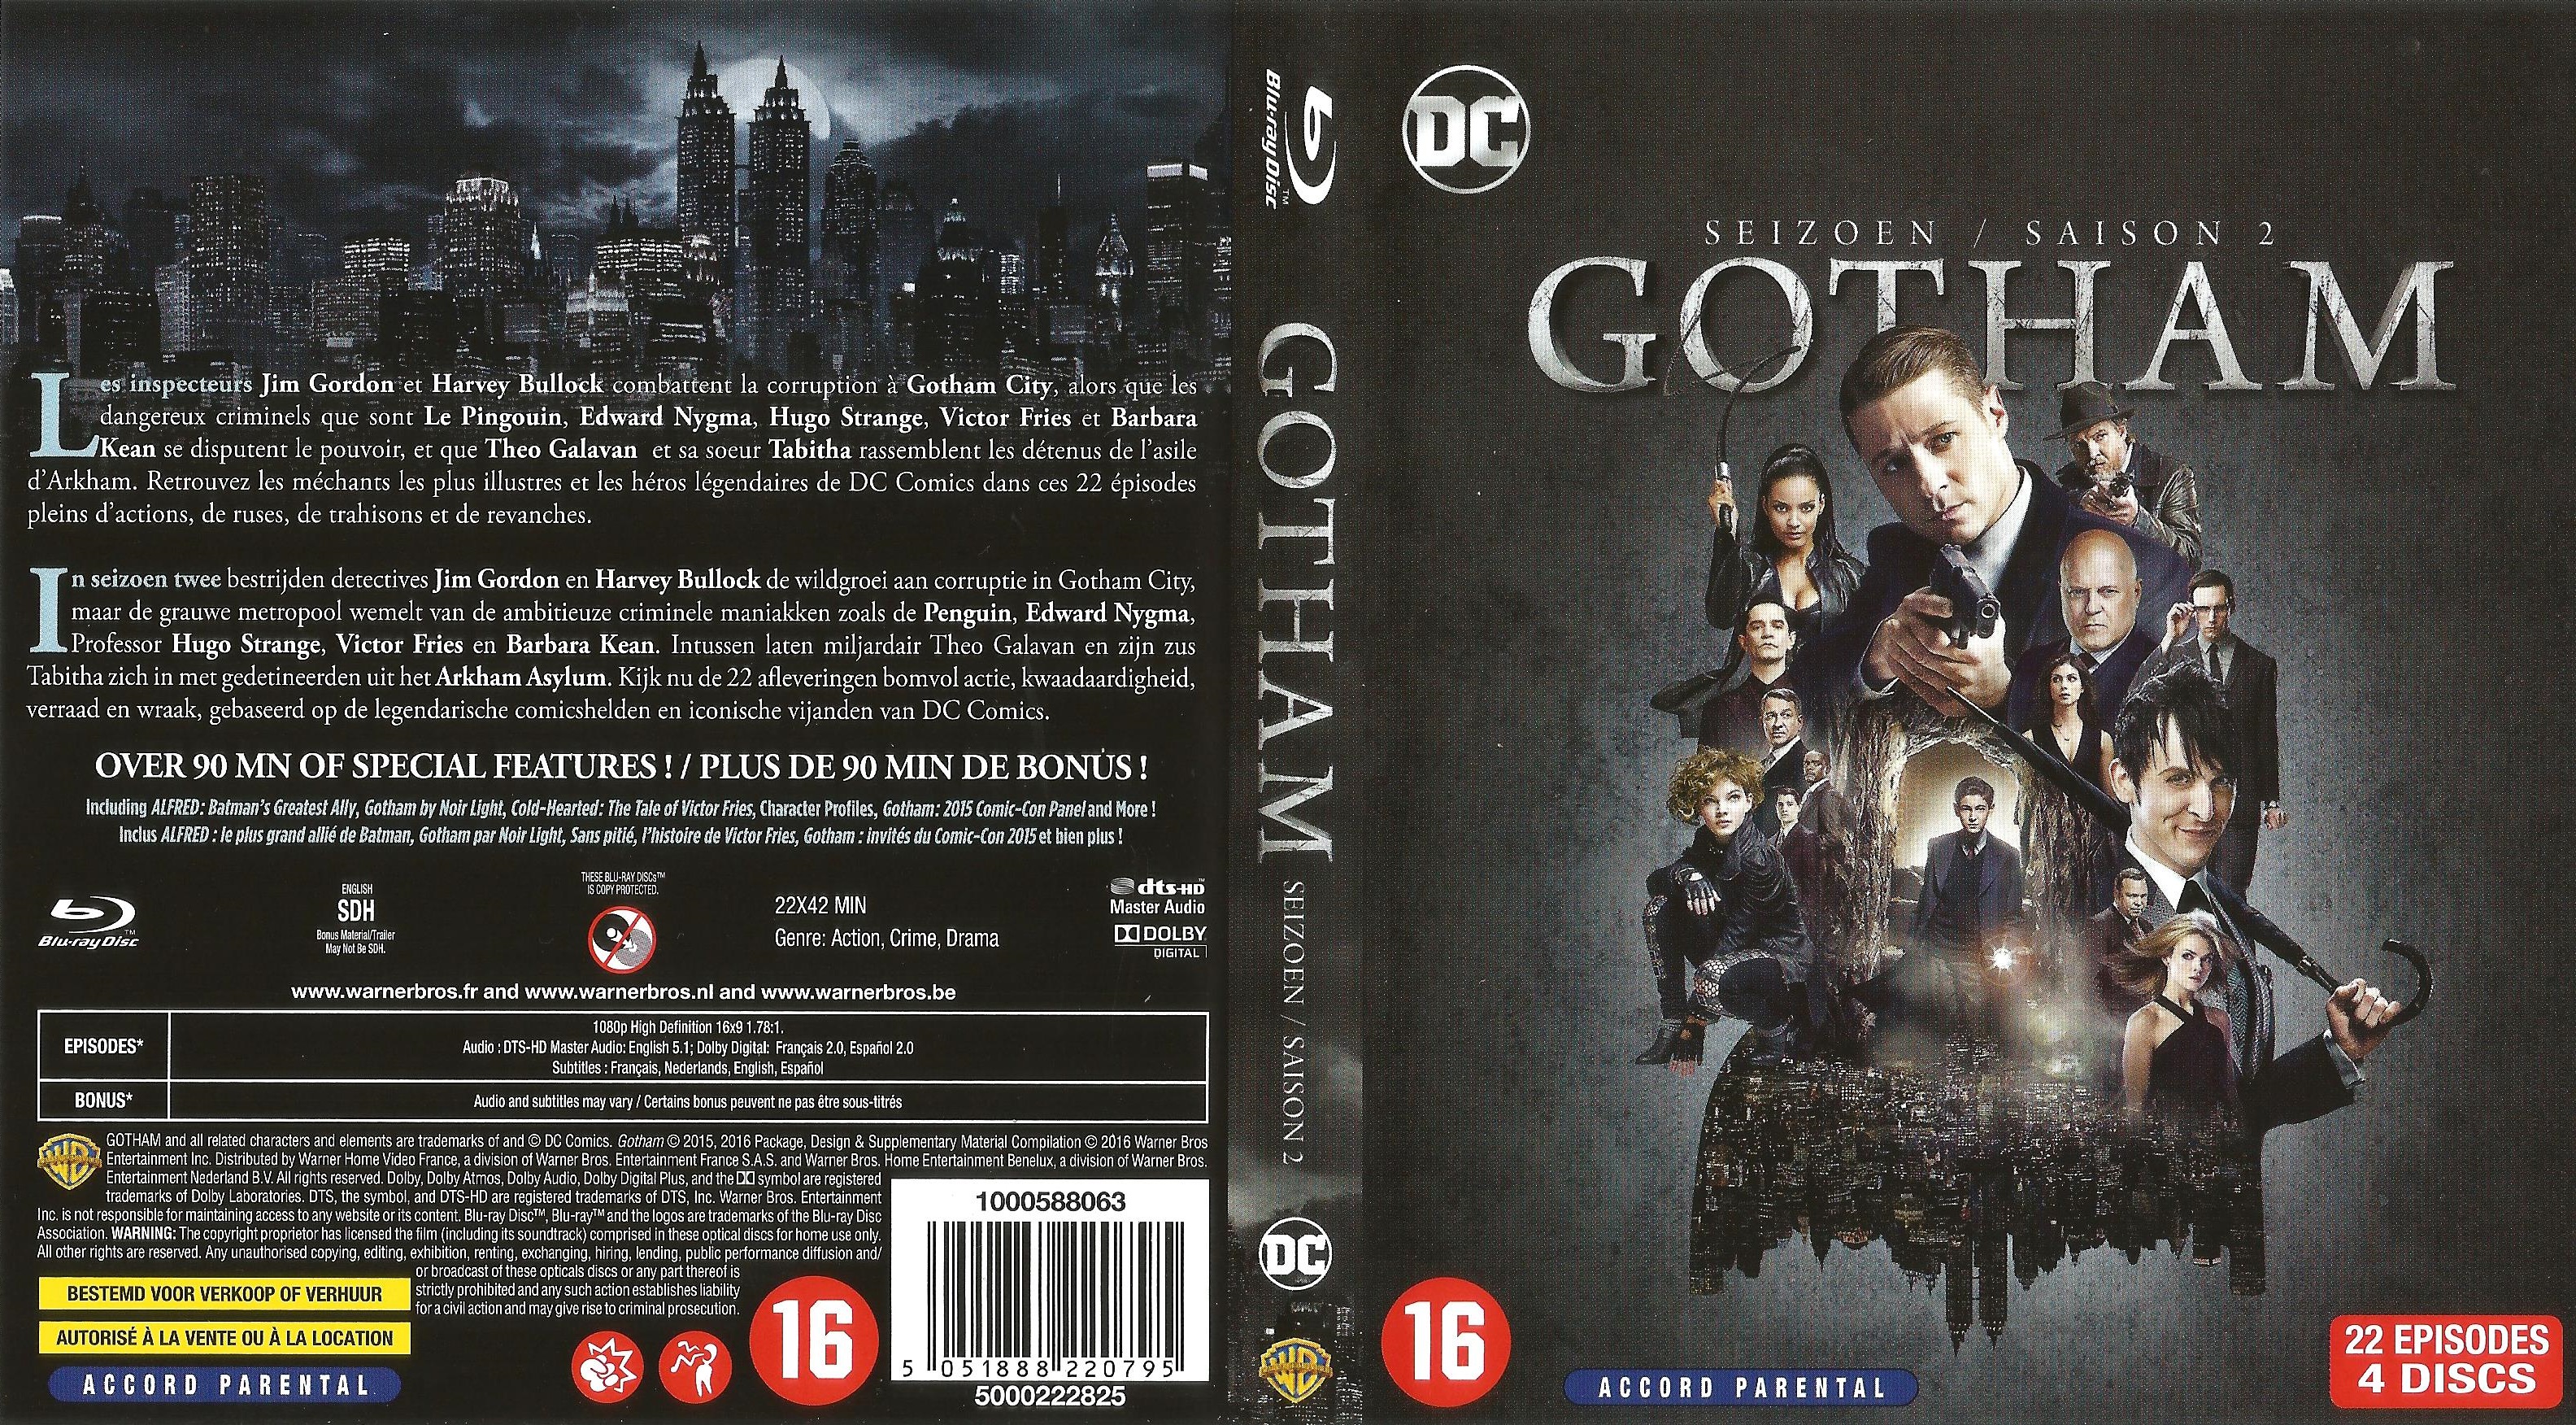 Jaquette DVD Gotham saison 2 (BLU-RAY)